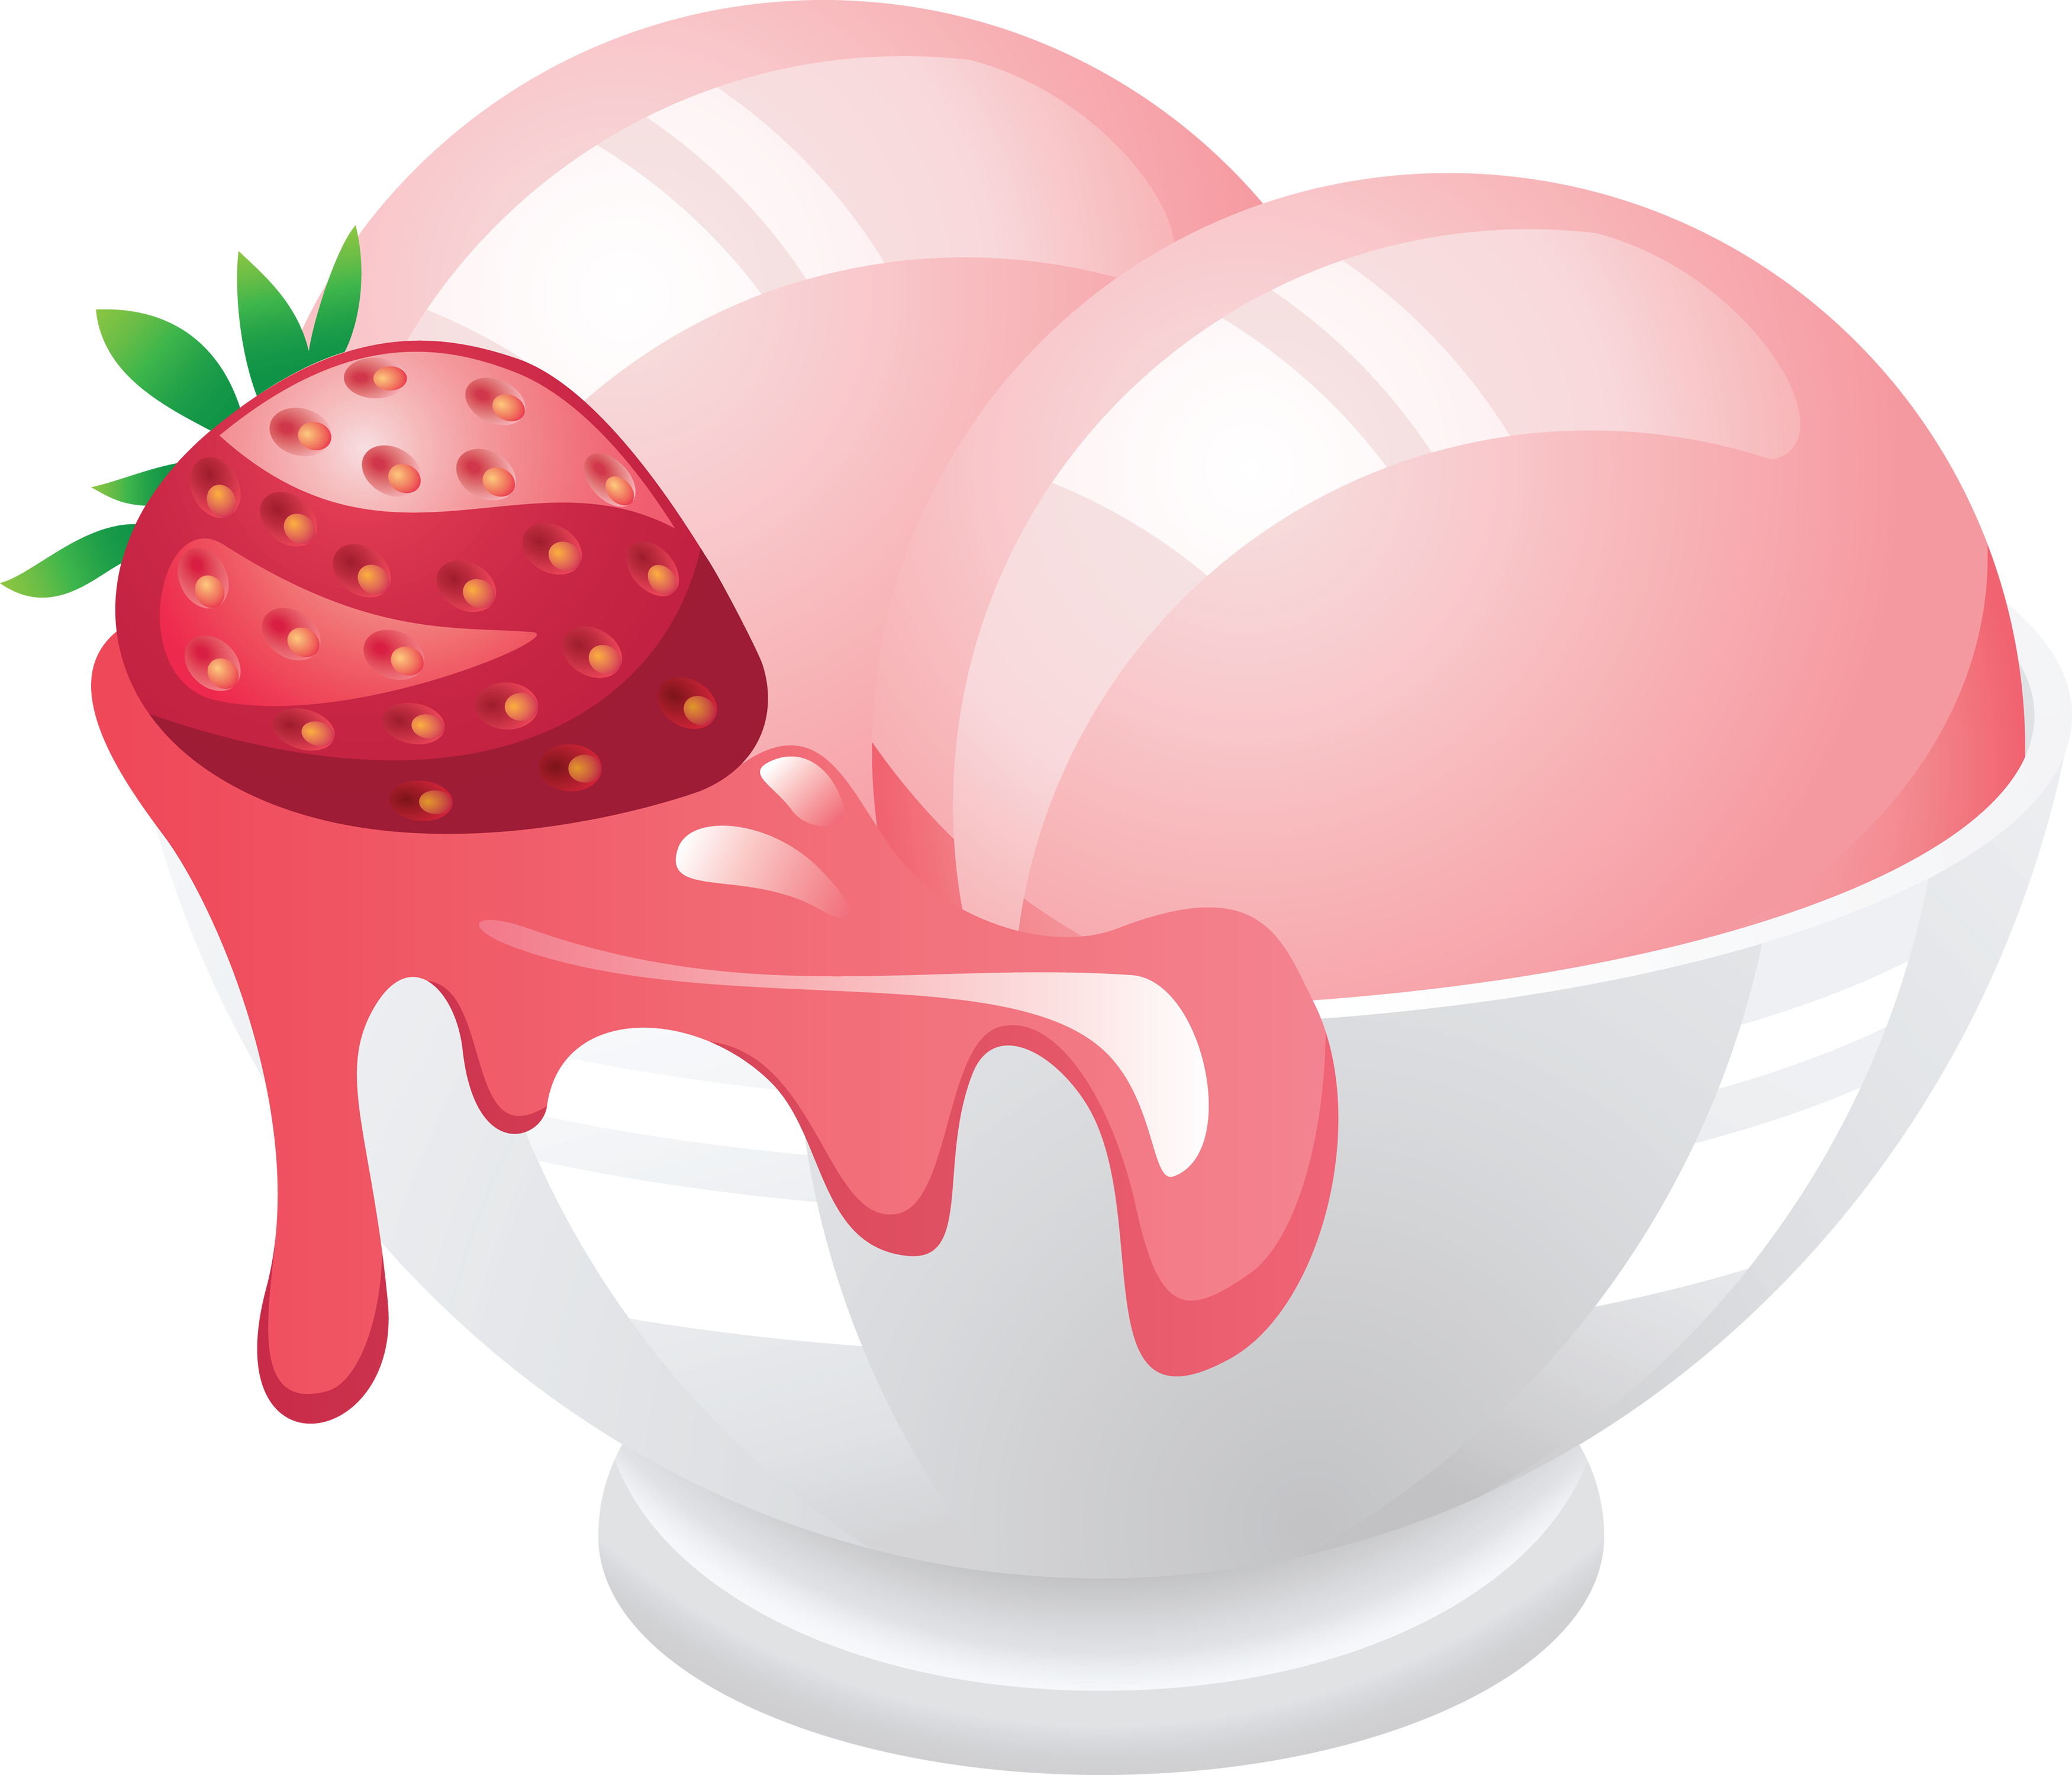 icecream clipart strawberry